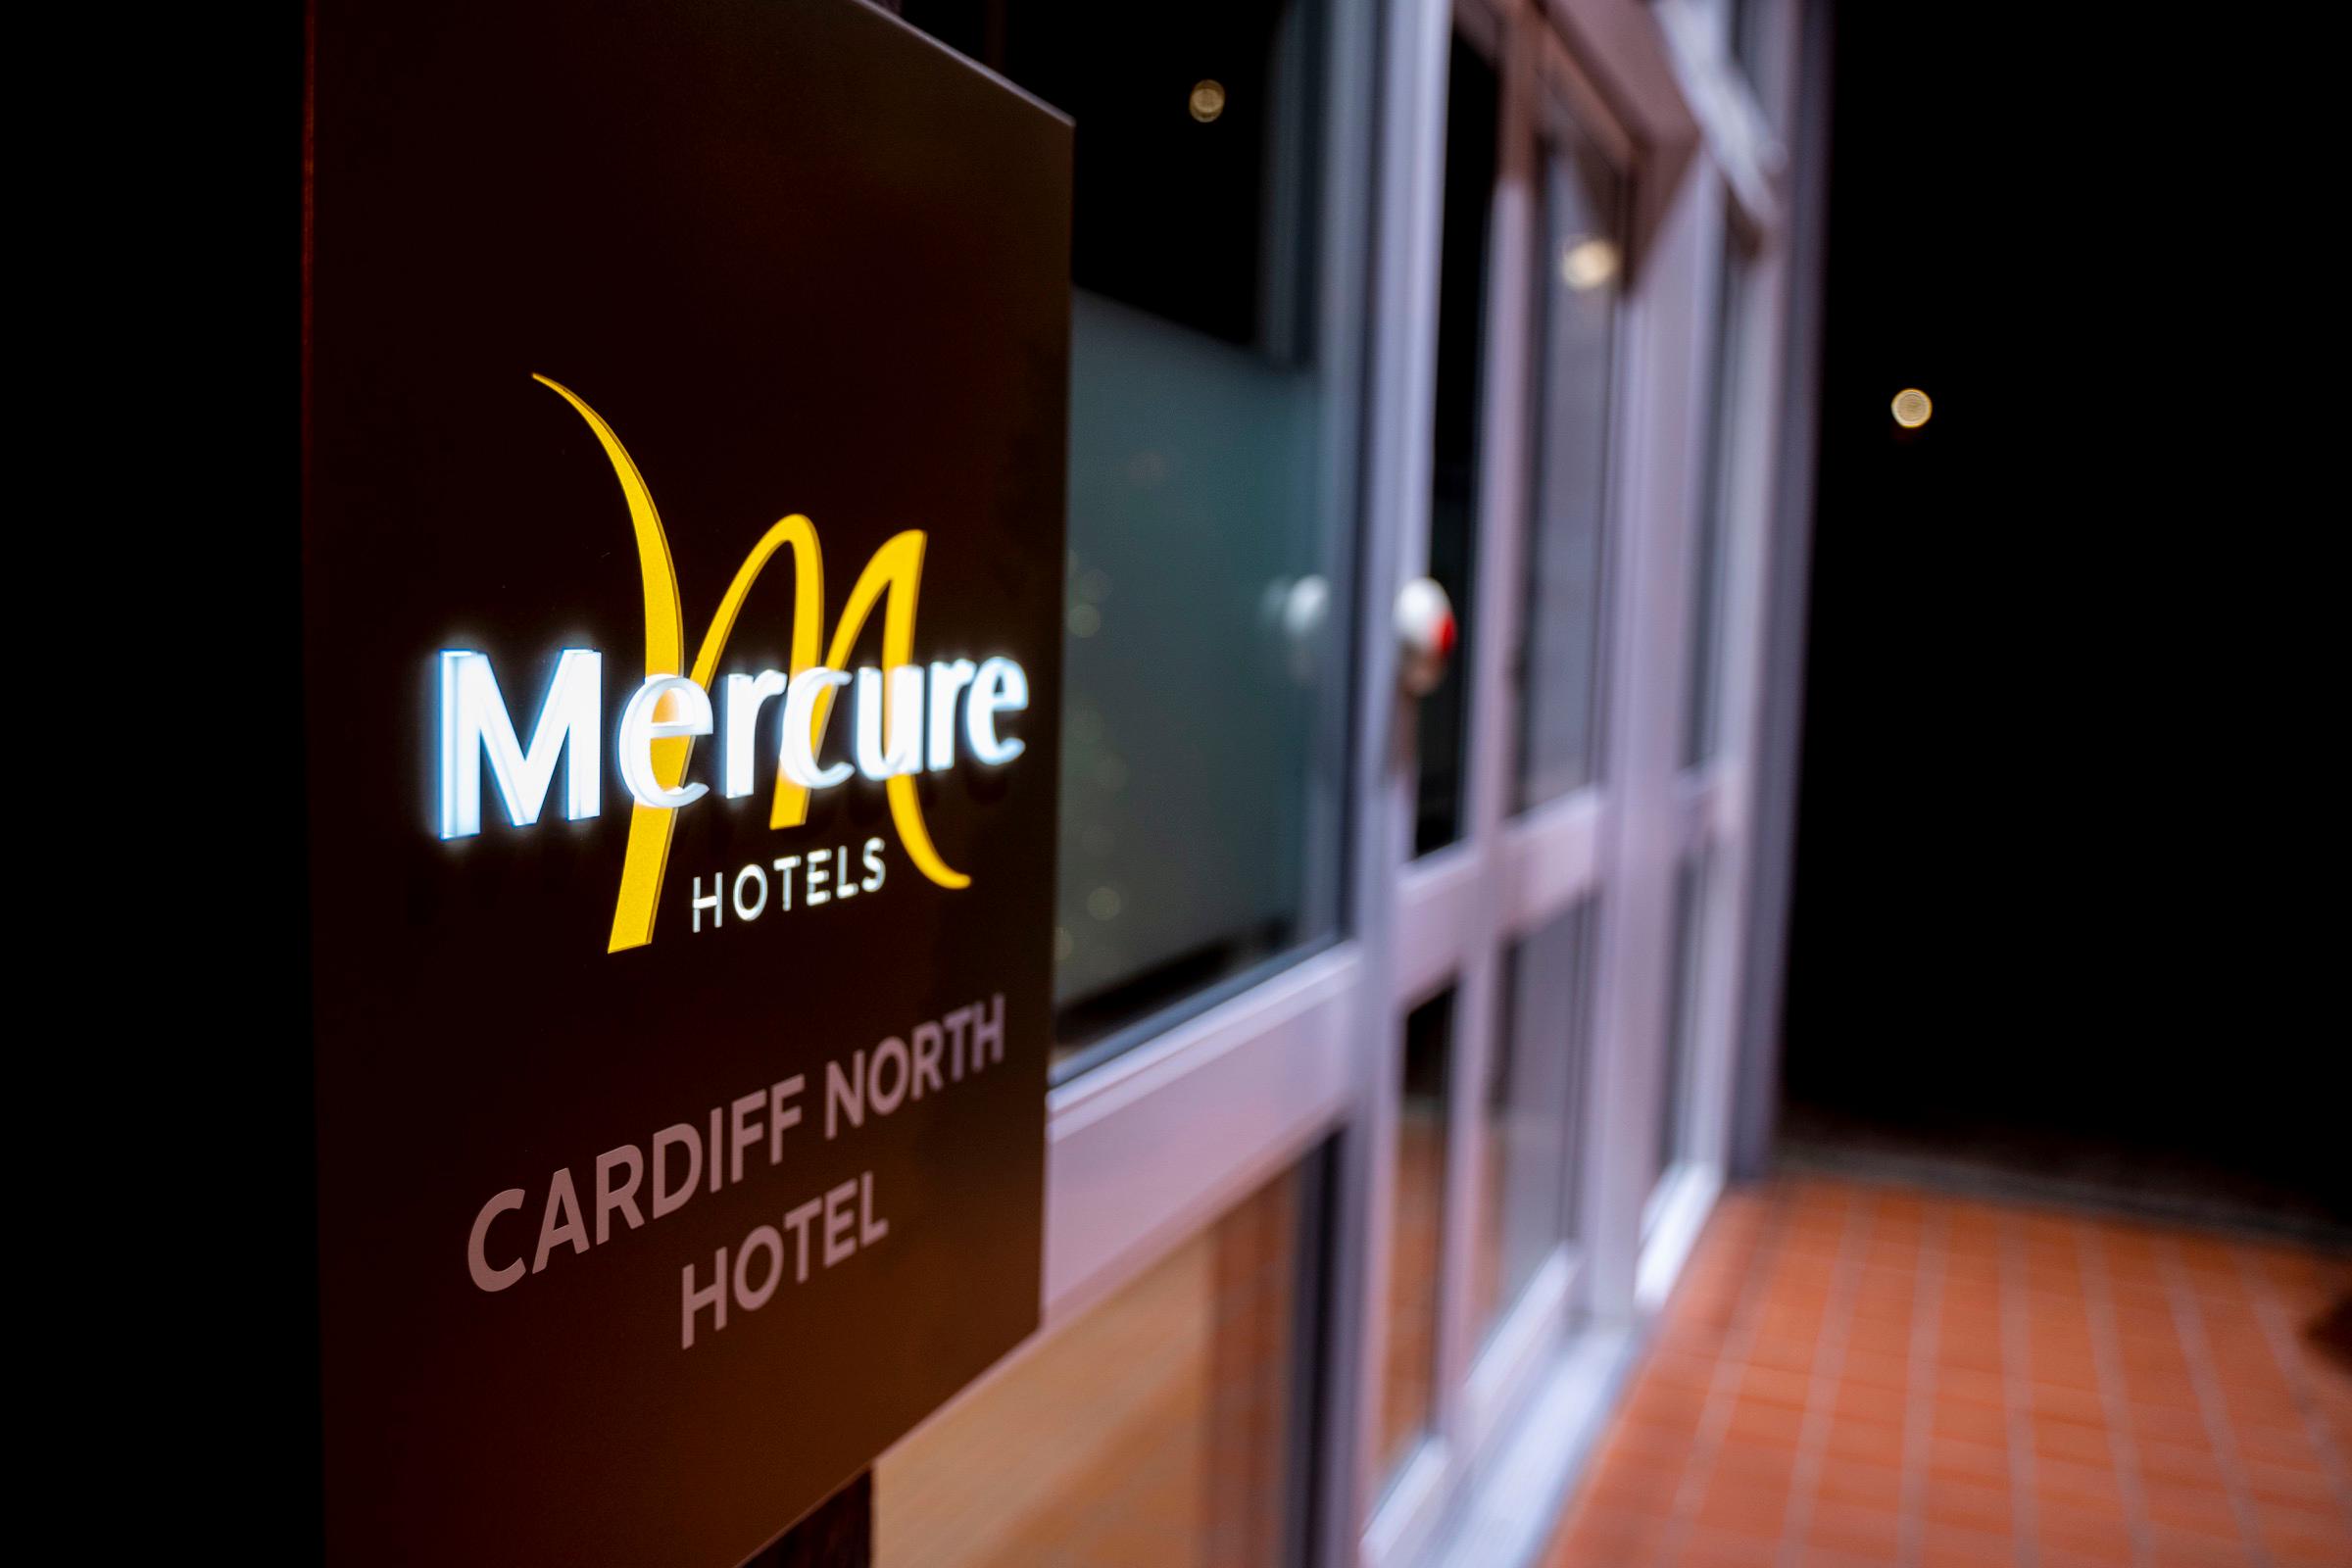 Mercure Cardiff North Hotel Cardiff 02920 589988